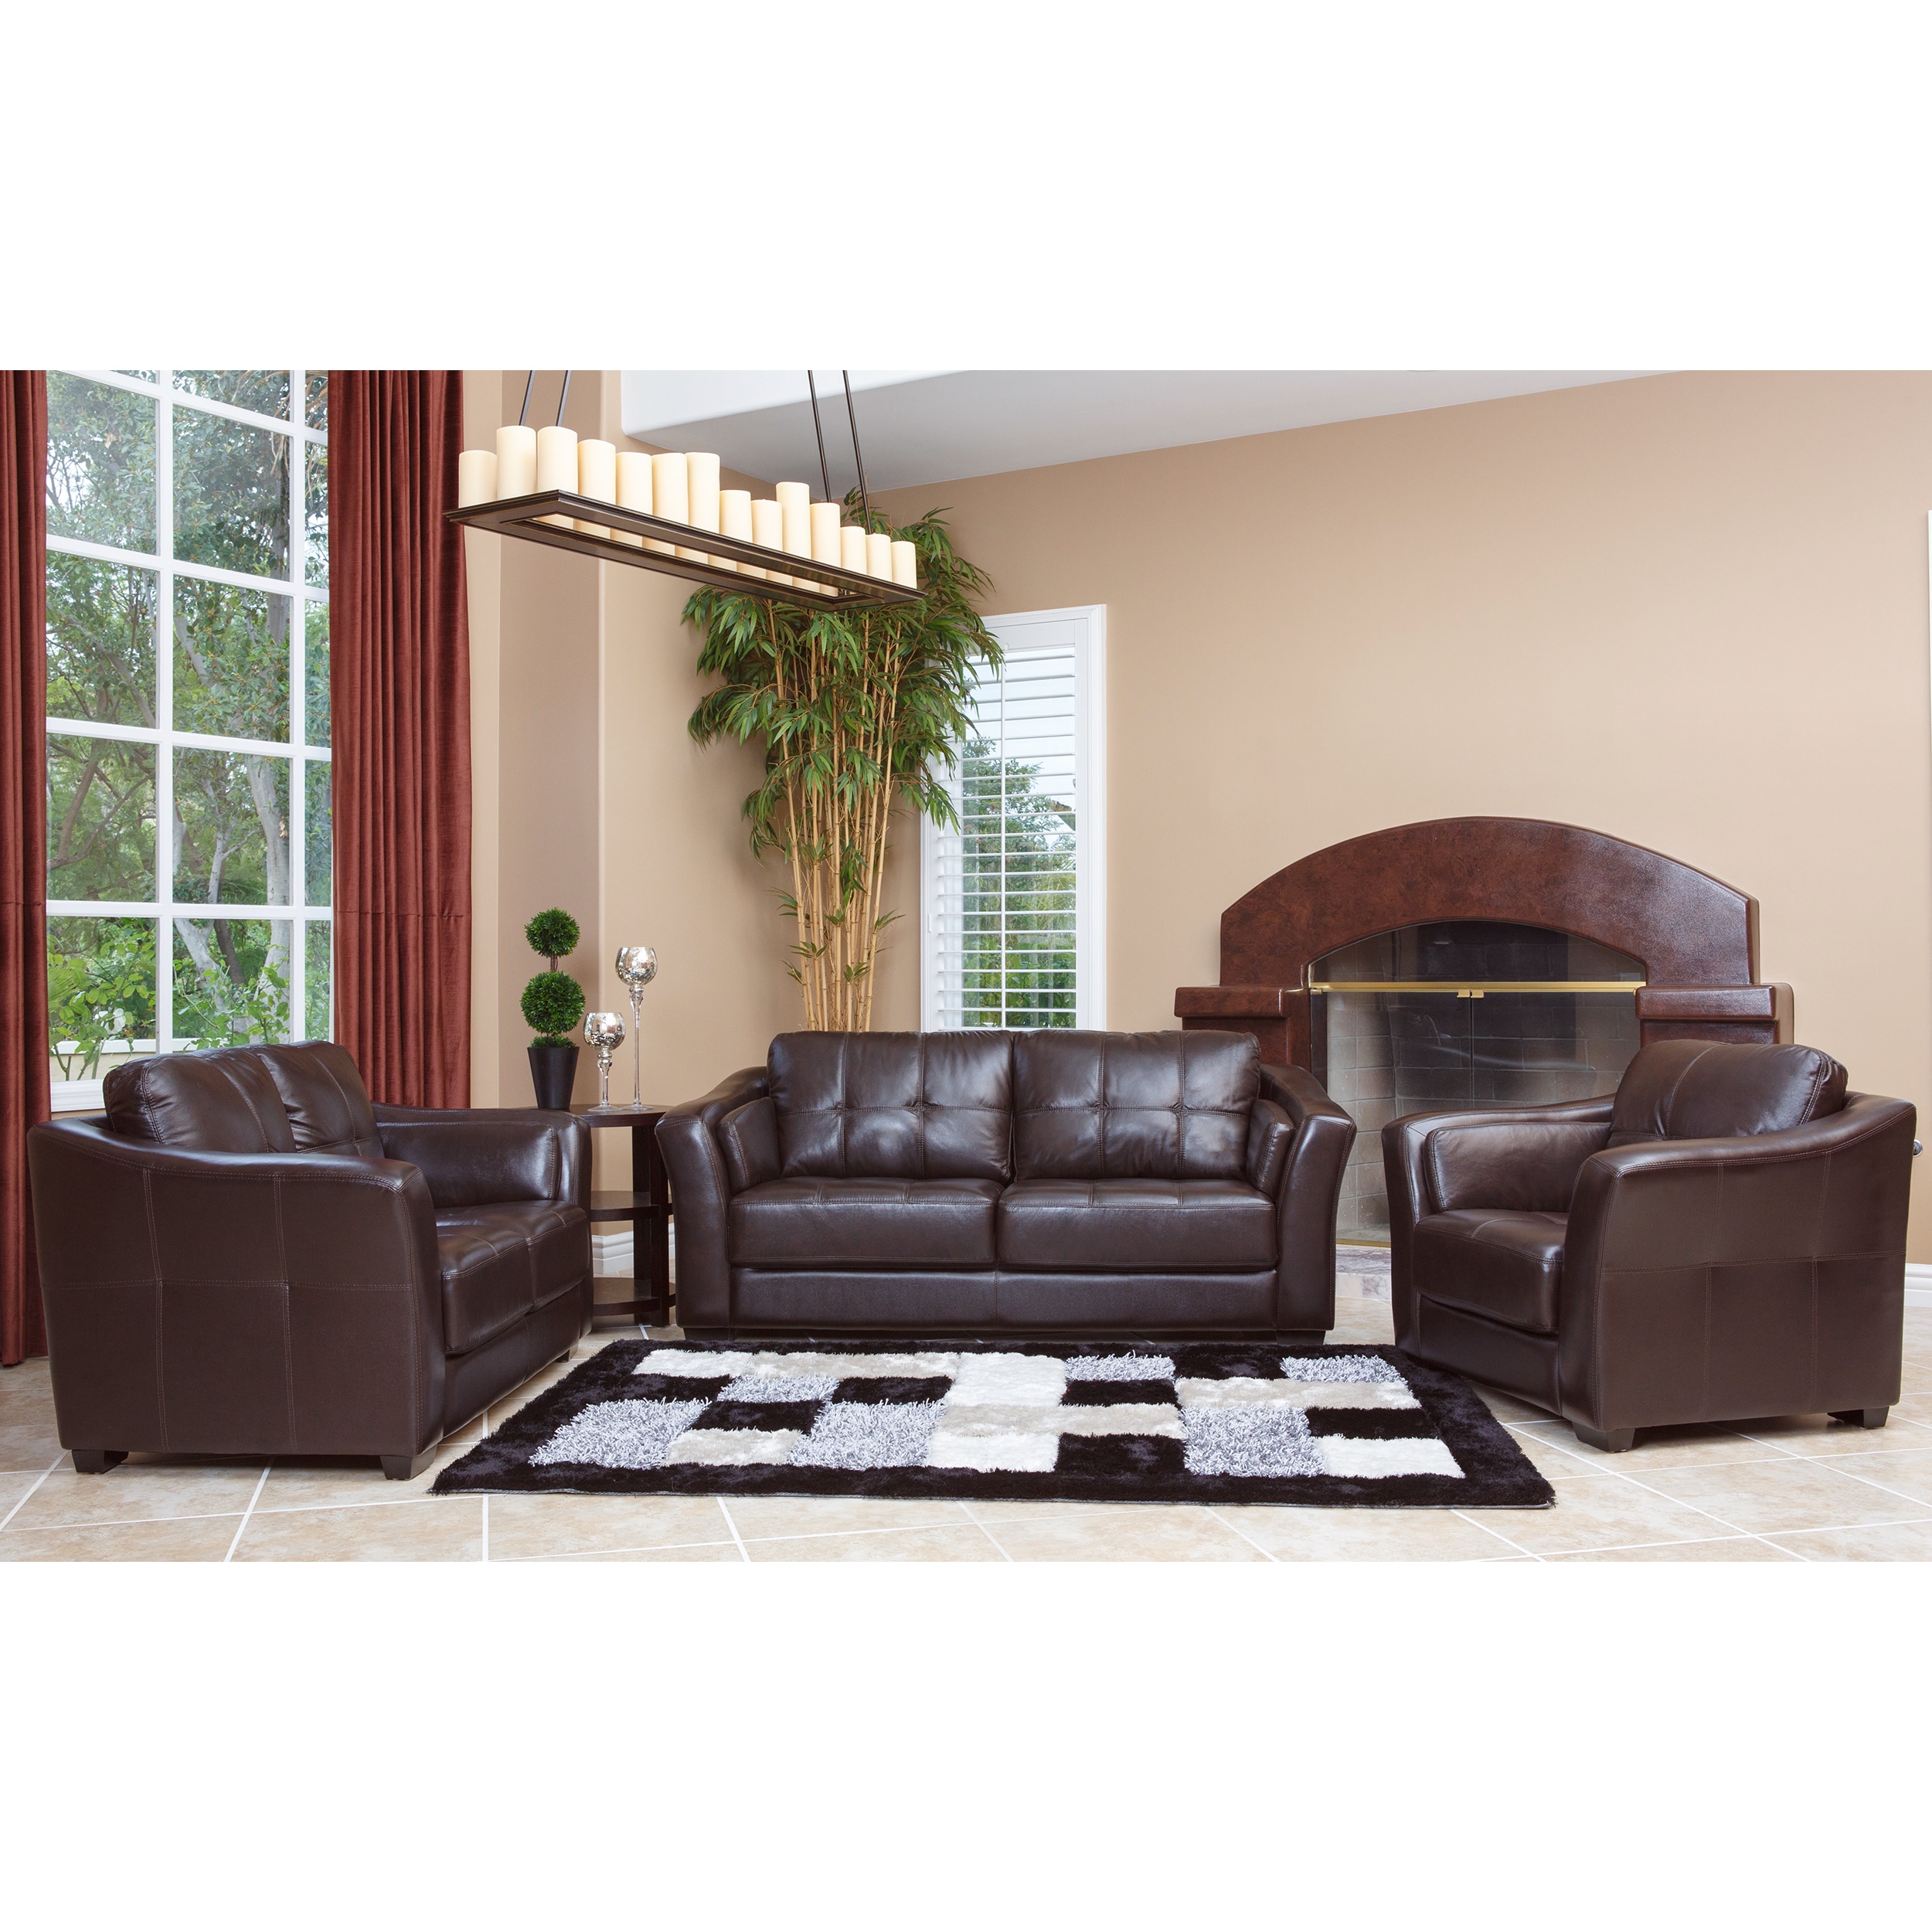 Abbyson Living Torrance Premium Dark Brown Leather 3 piece Living Room Furniture Set